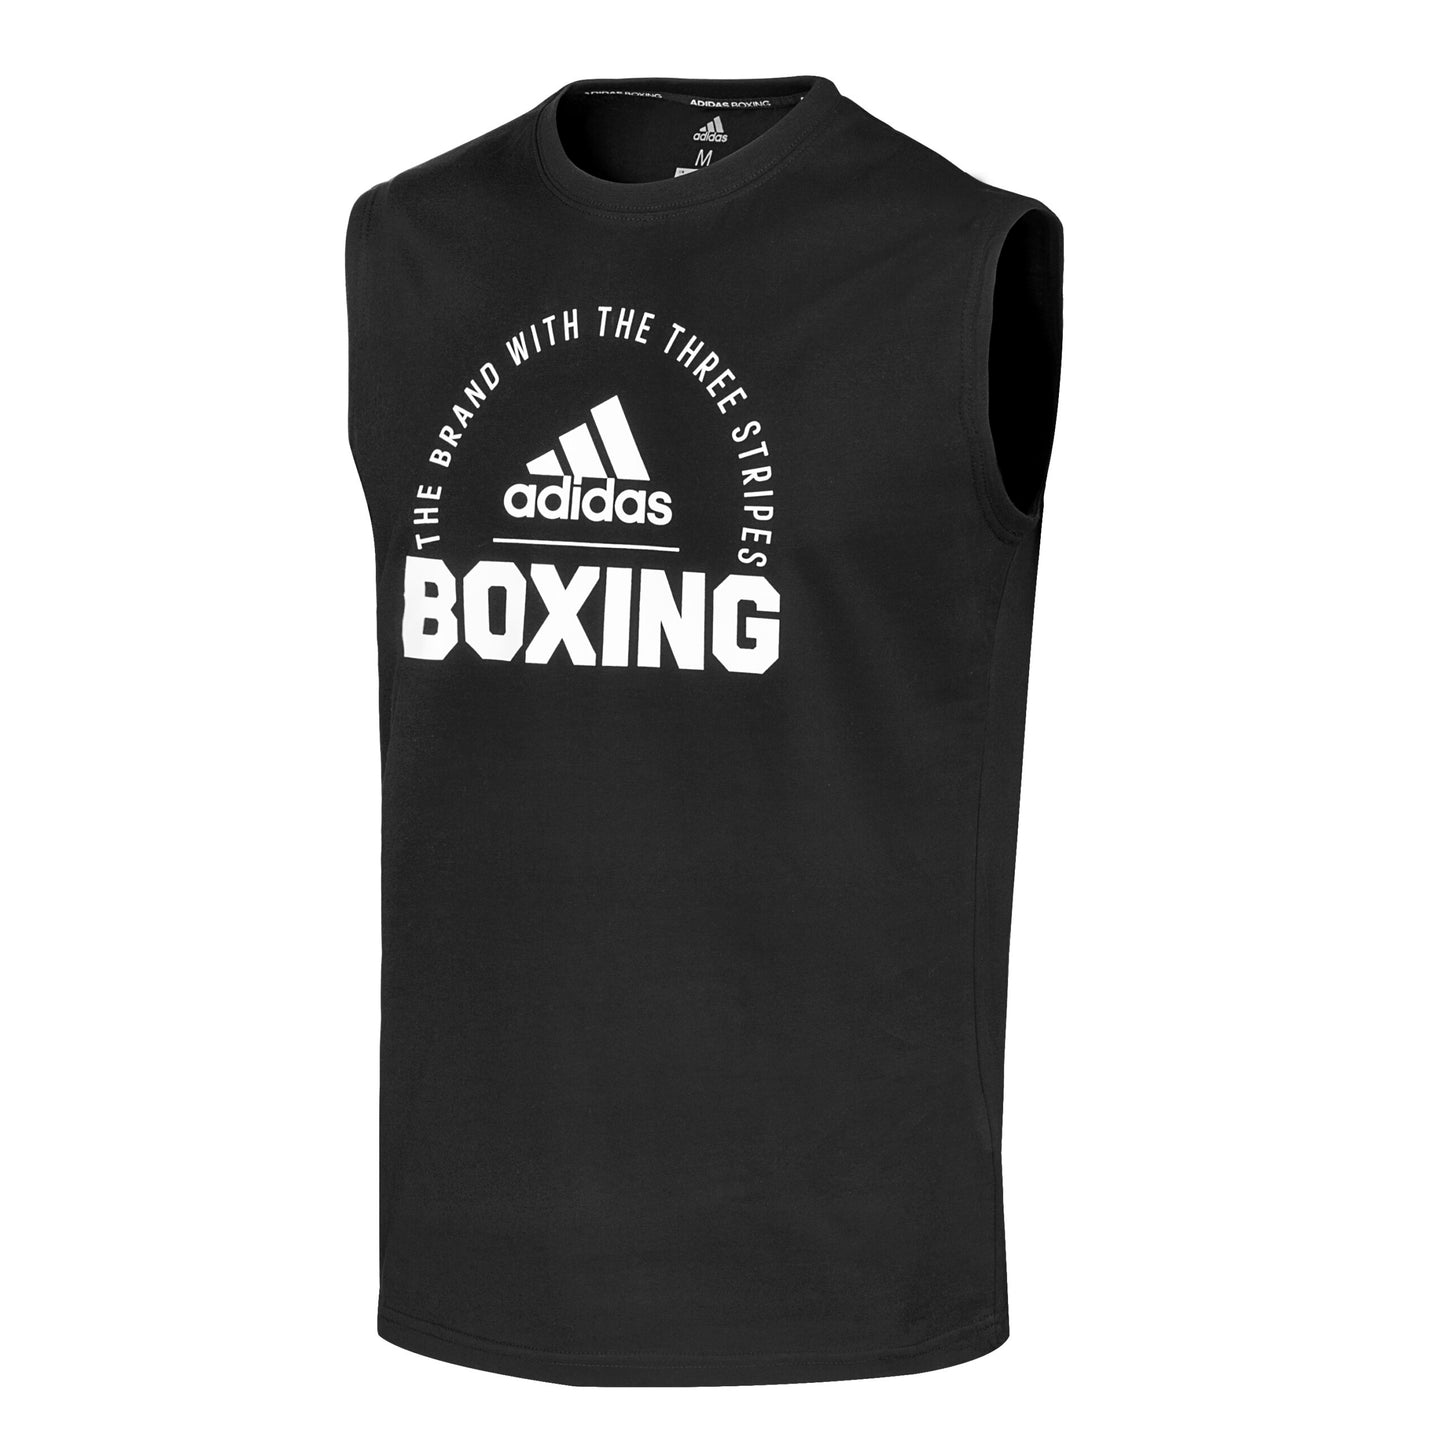 Clst21 B Adidas Boxing Sleeveless Tank Top Black 03